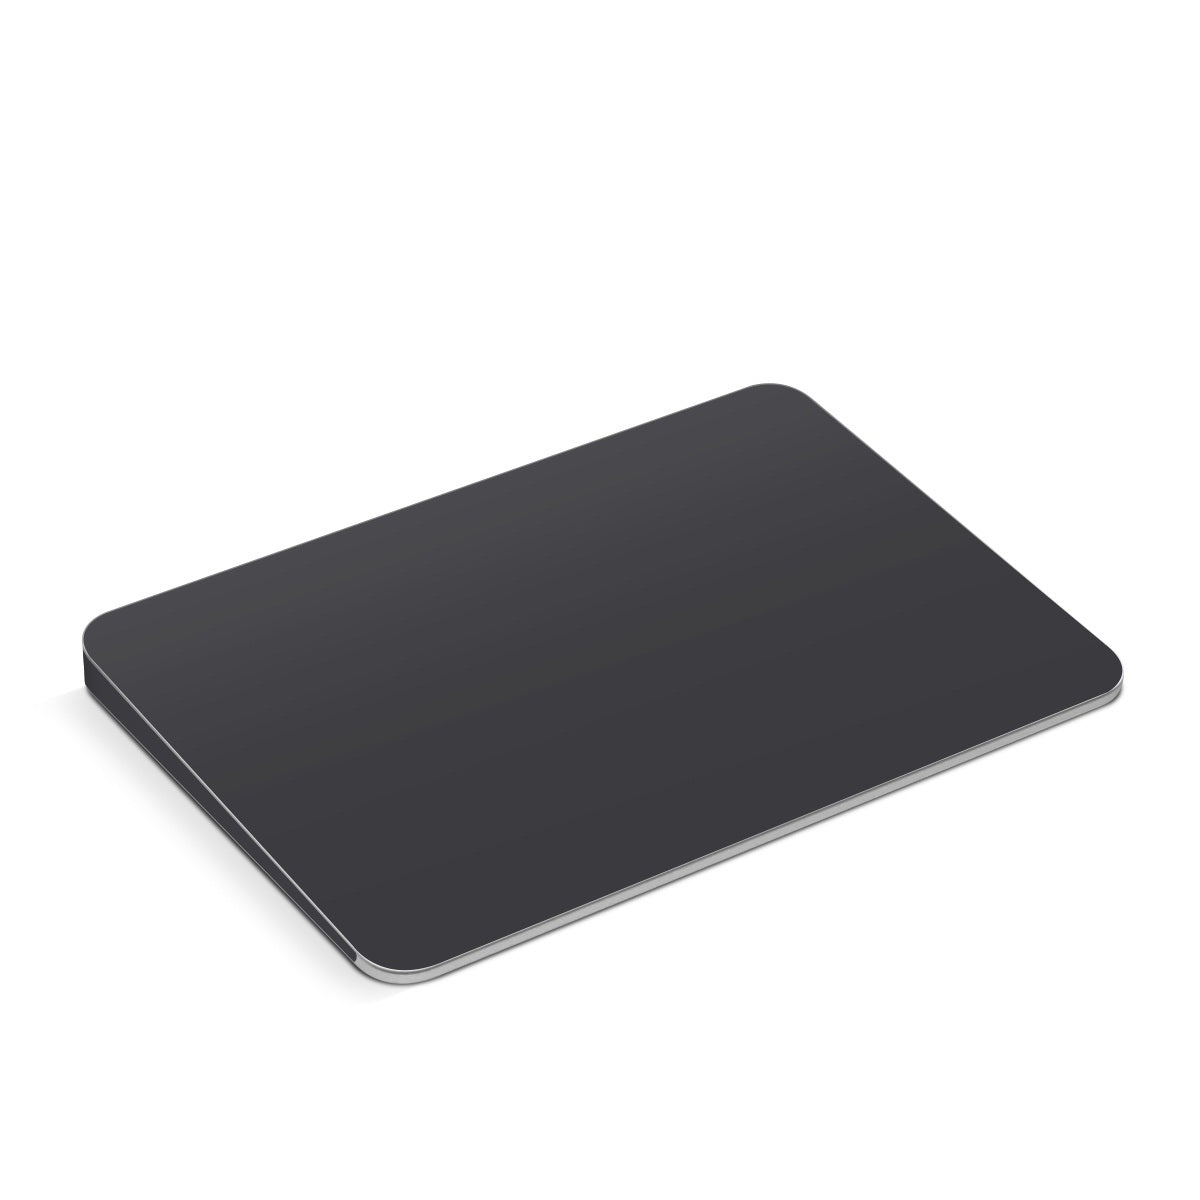 Solid State Slate Grey - Apple Magic Trackpad Skin